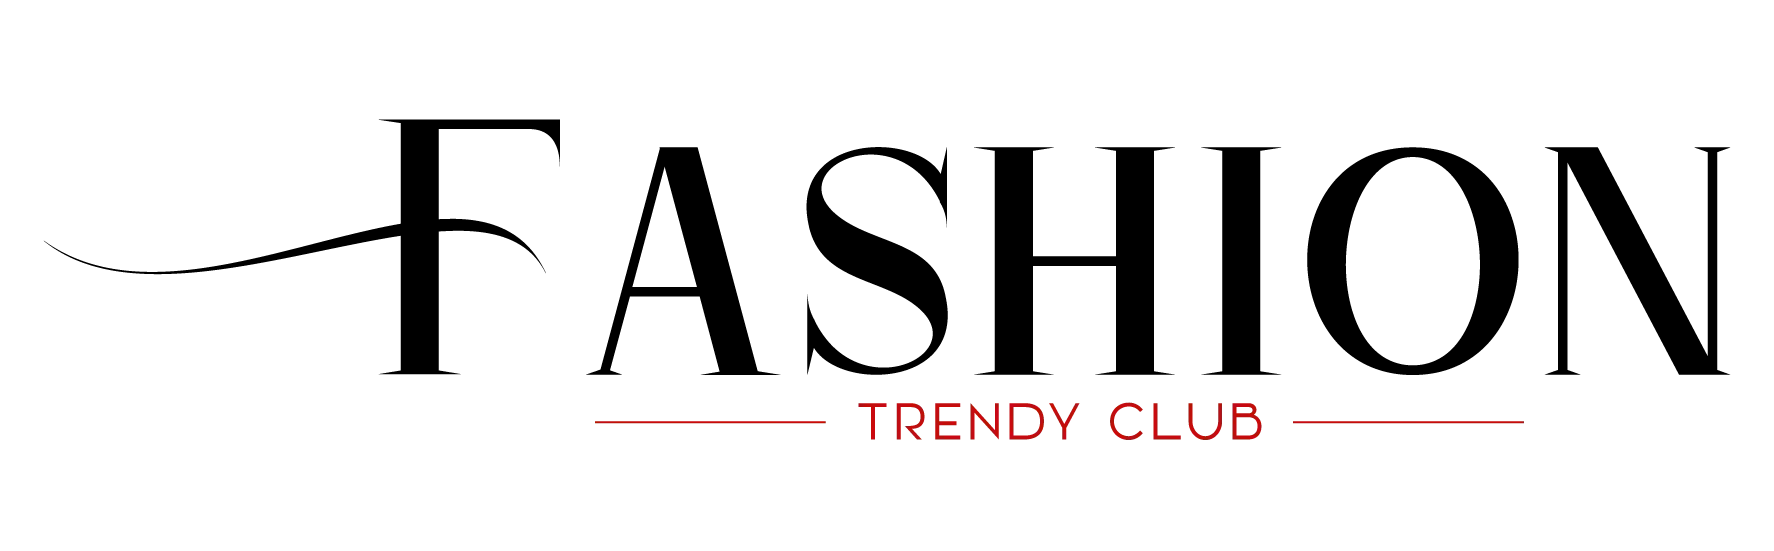 Fashion-Trendy-Club-1